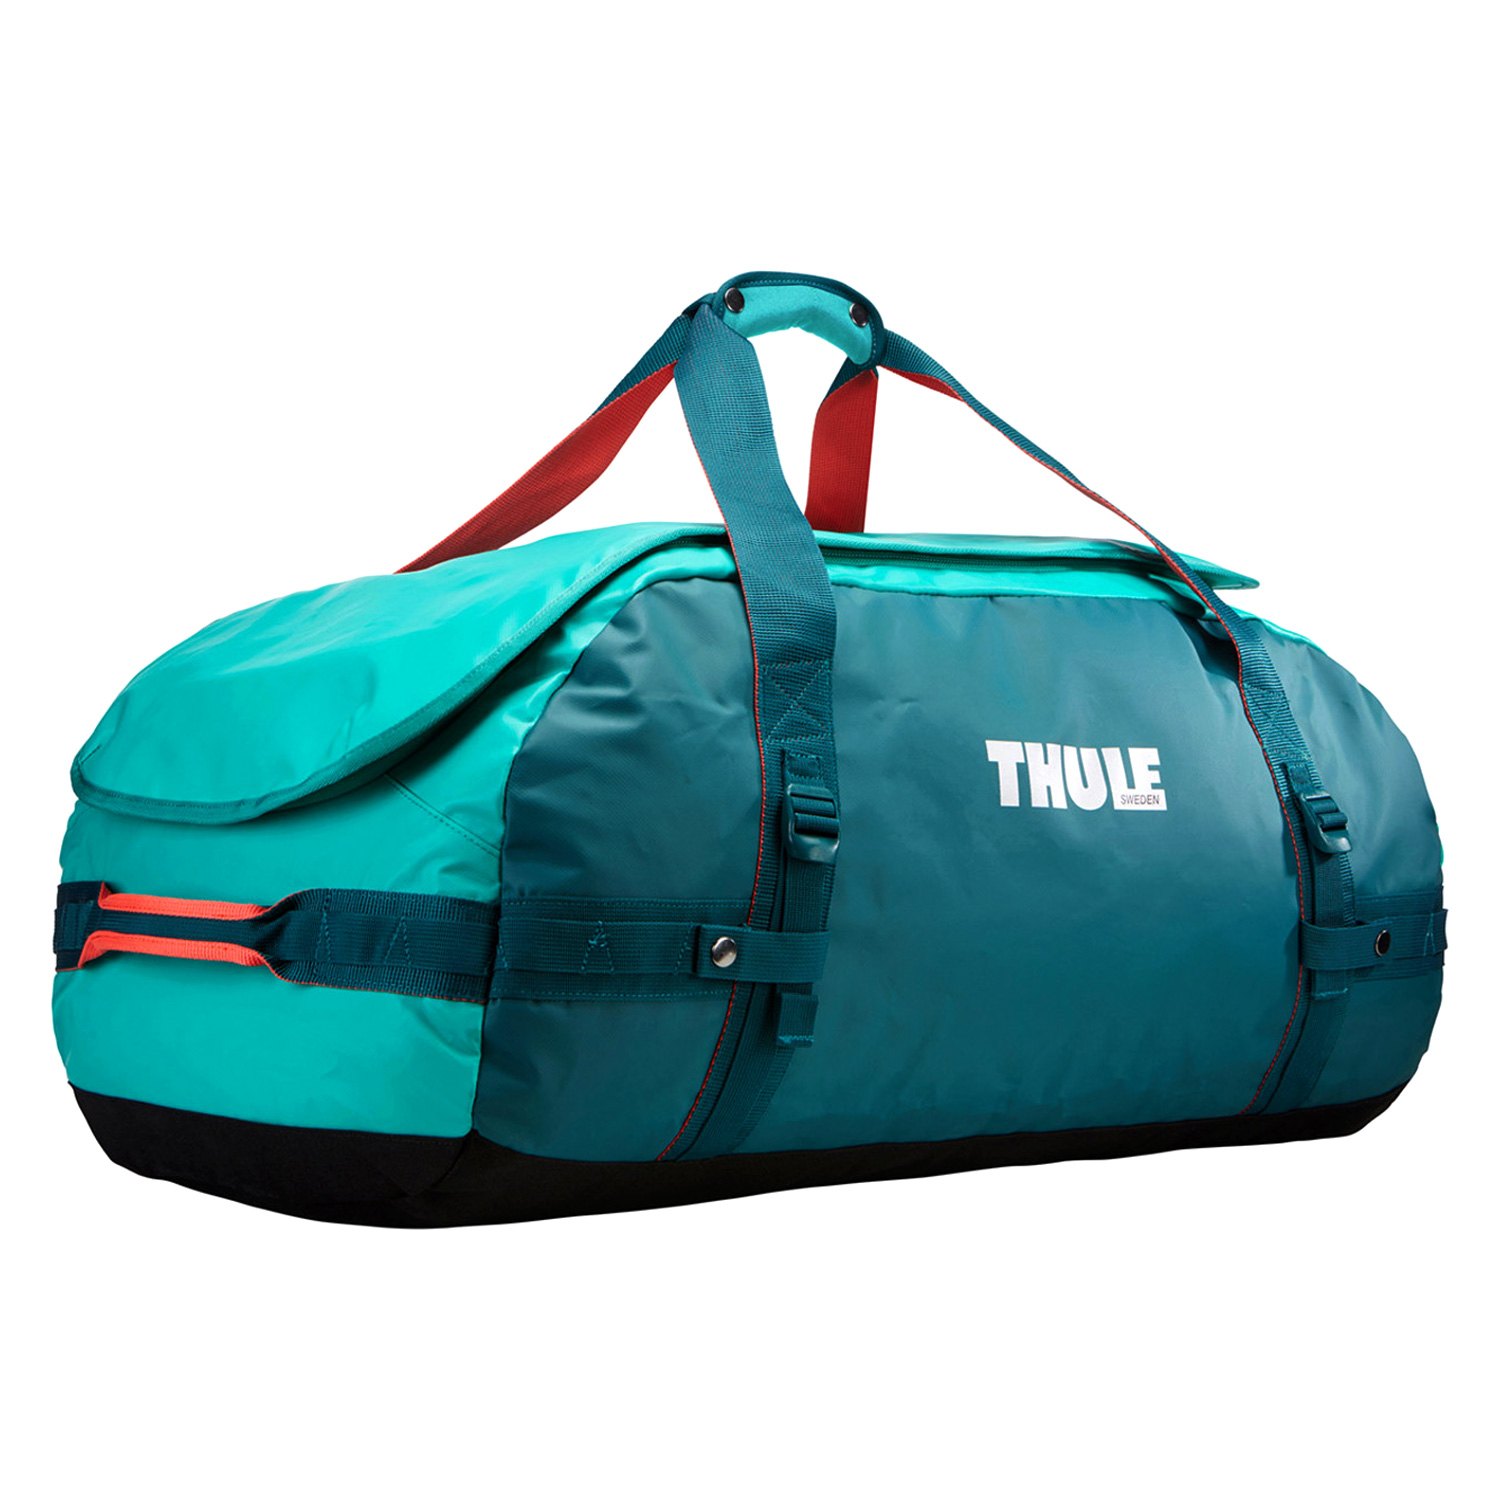 thule chasm travel duffel bag